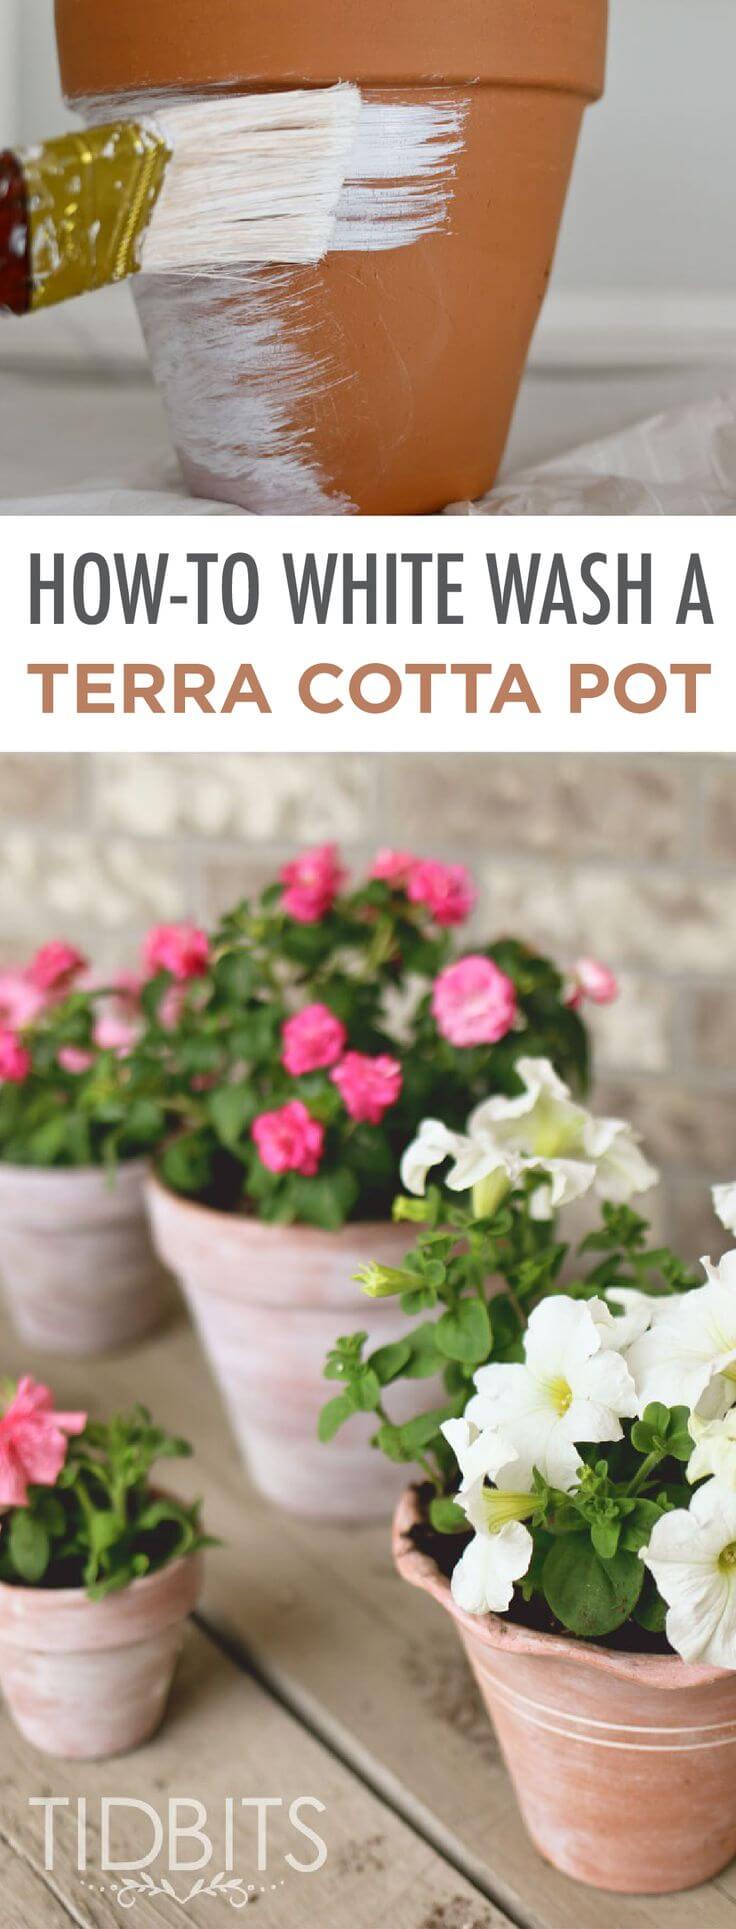 DIY Flower Pots with Whitewashed Finish